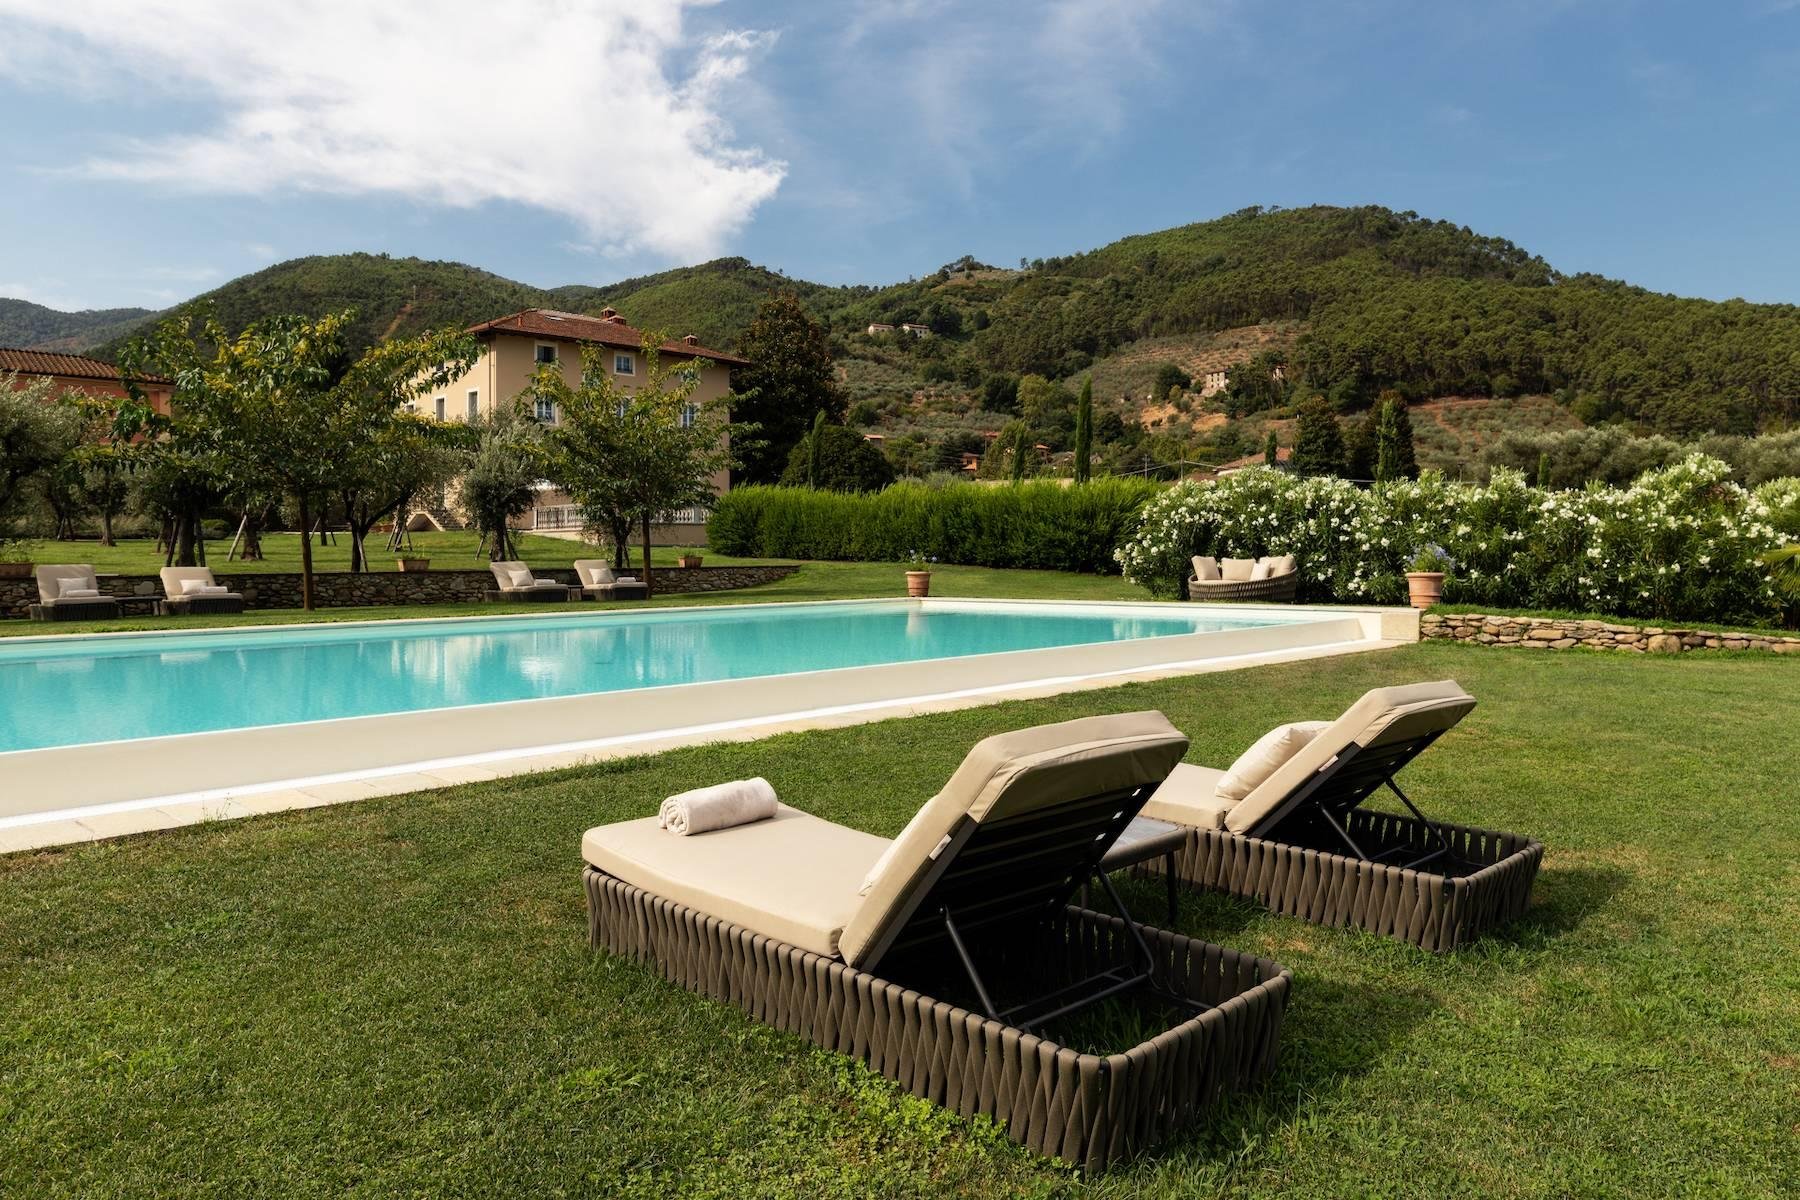 Francis York Book a Stay This Summer at Villa de Camelie Luxury Villa Rental Near Lucca in Tuscany, Italy Sothebys Realty Retreats 16.jpg